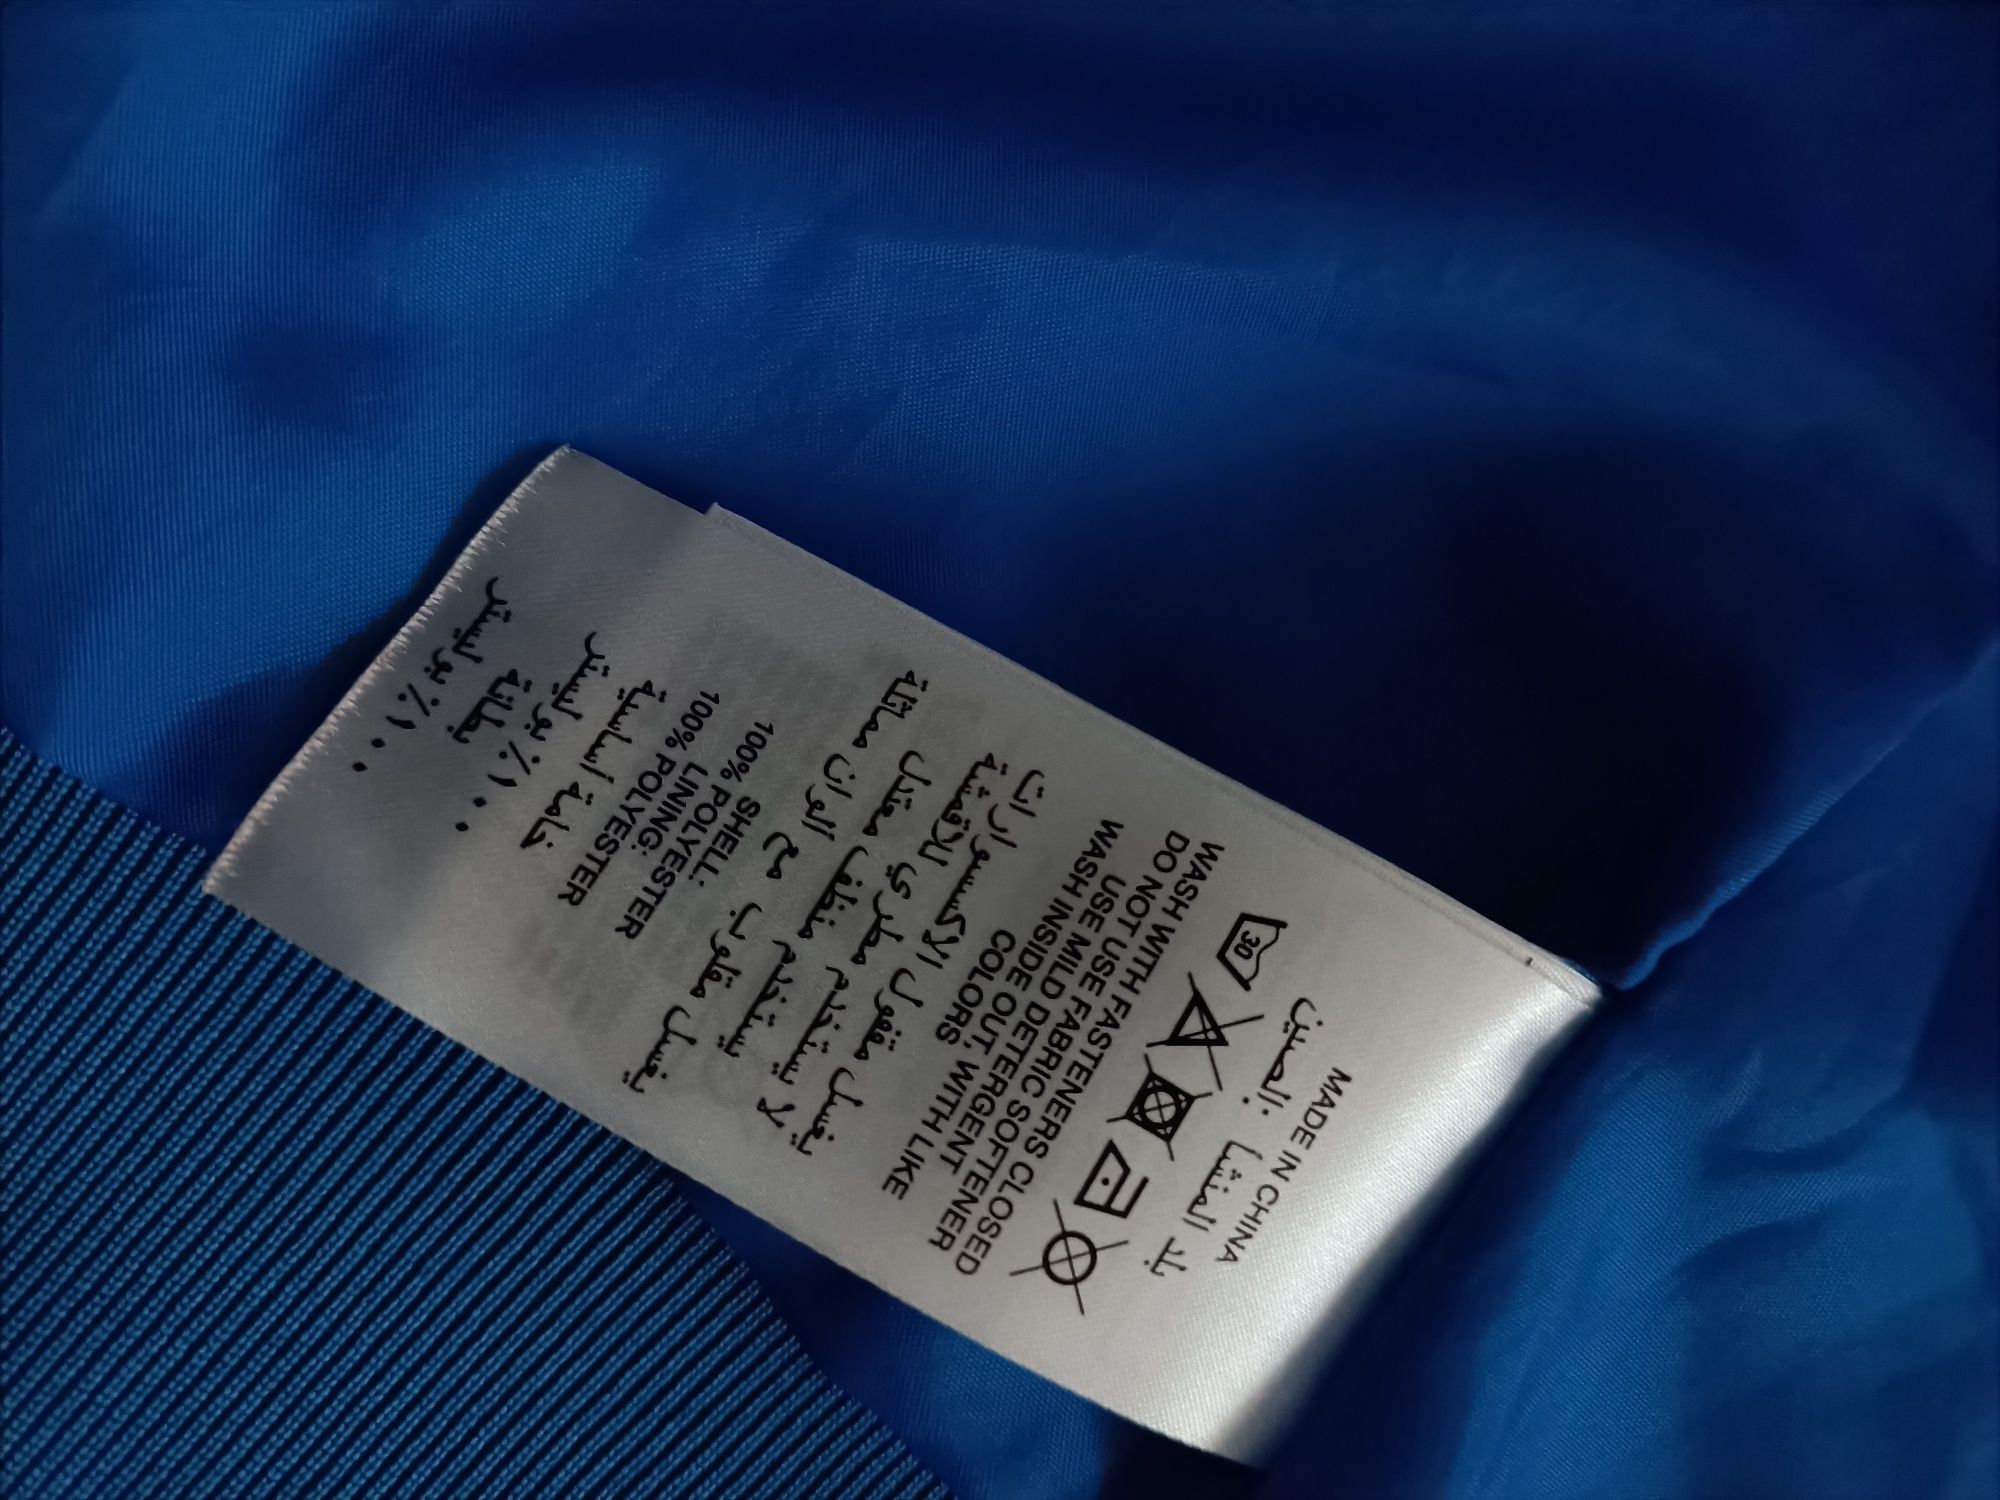 Jachetă Adidas - Pharrell Williams  , size M, produs Original